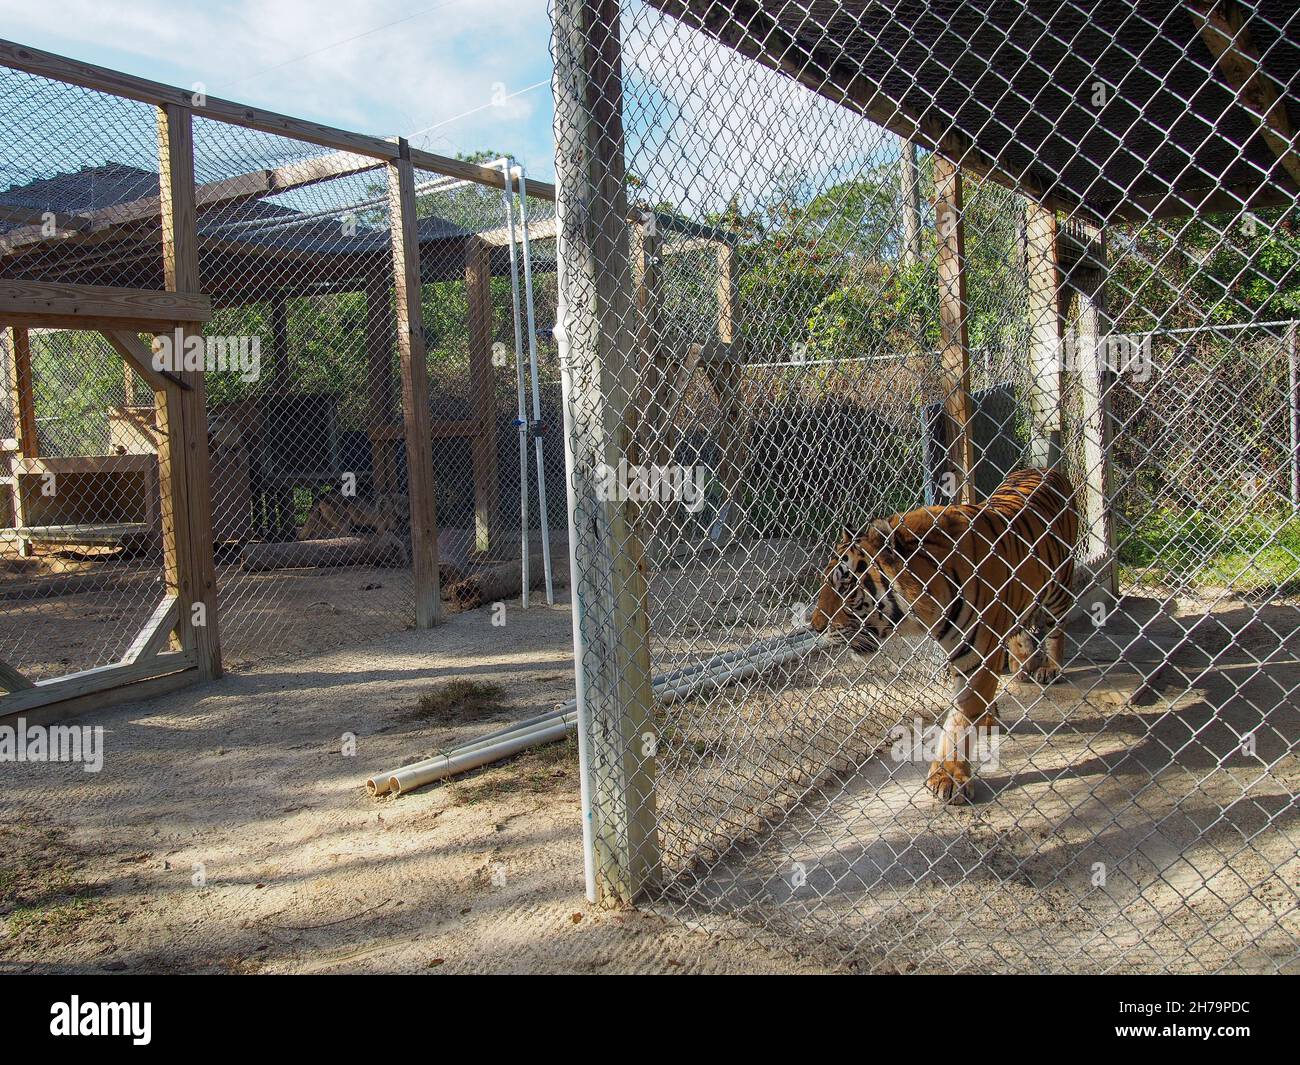 Bengalischer Tiger in seinem Gehege im Octagon Wildlife Sanctuary in Punta Gorda, Florida, USA, 2020 © Katharine Andriotis Stockfoto